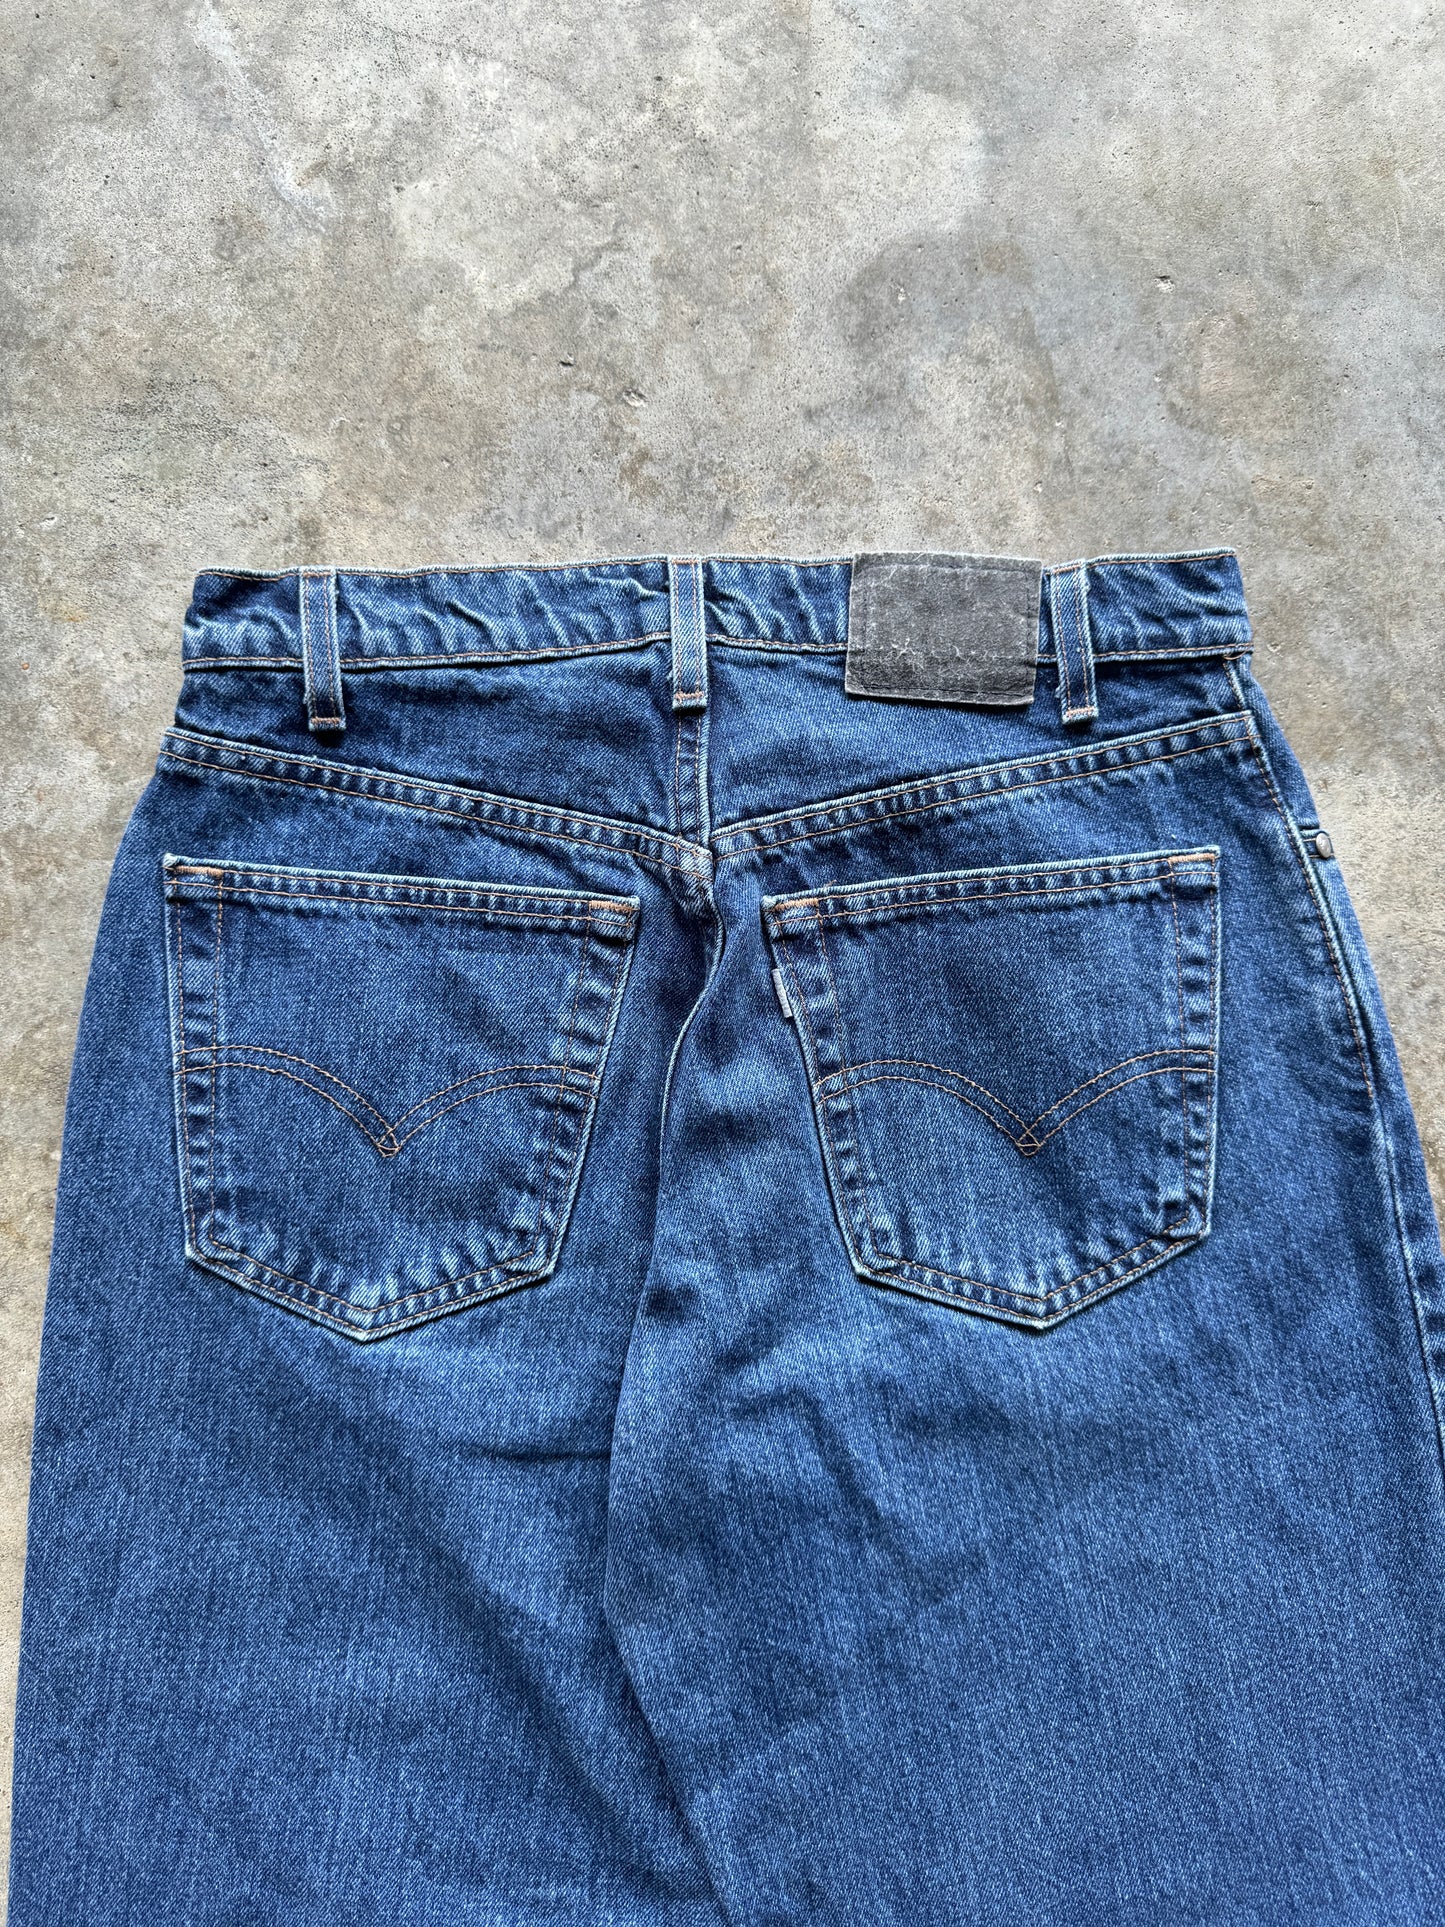 (30 x 30) Levi SilverTab Baggy Jeans